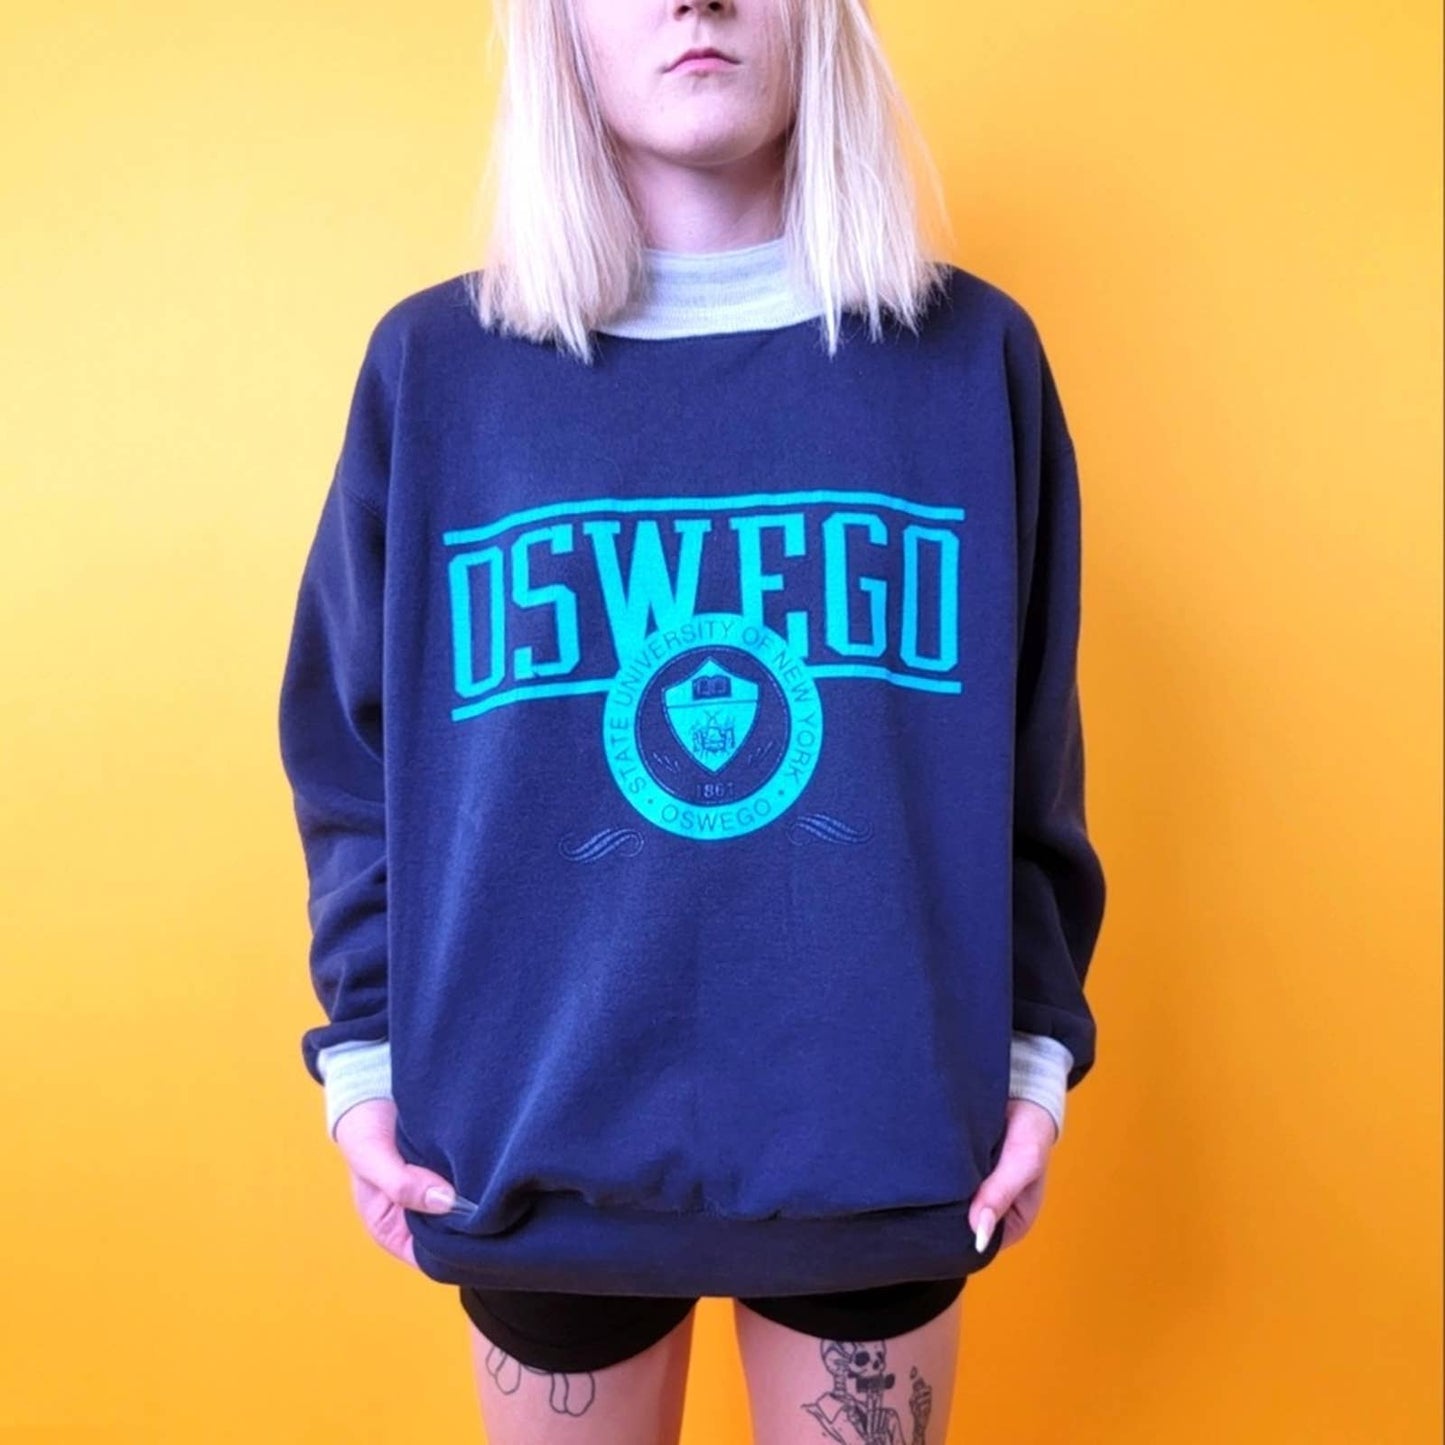 Vintage 90s Oswego State University Pullover Sweatshirt - L/XL